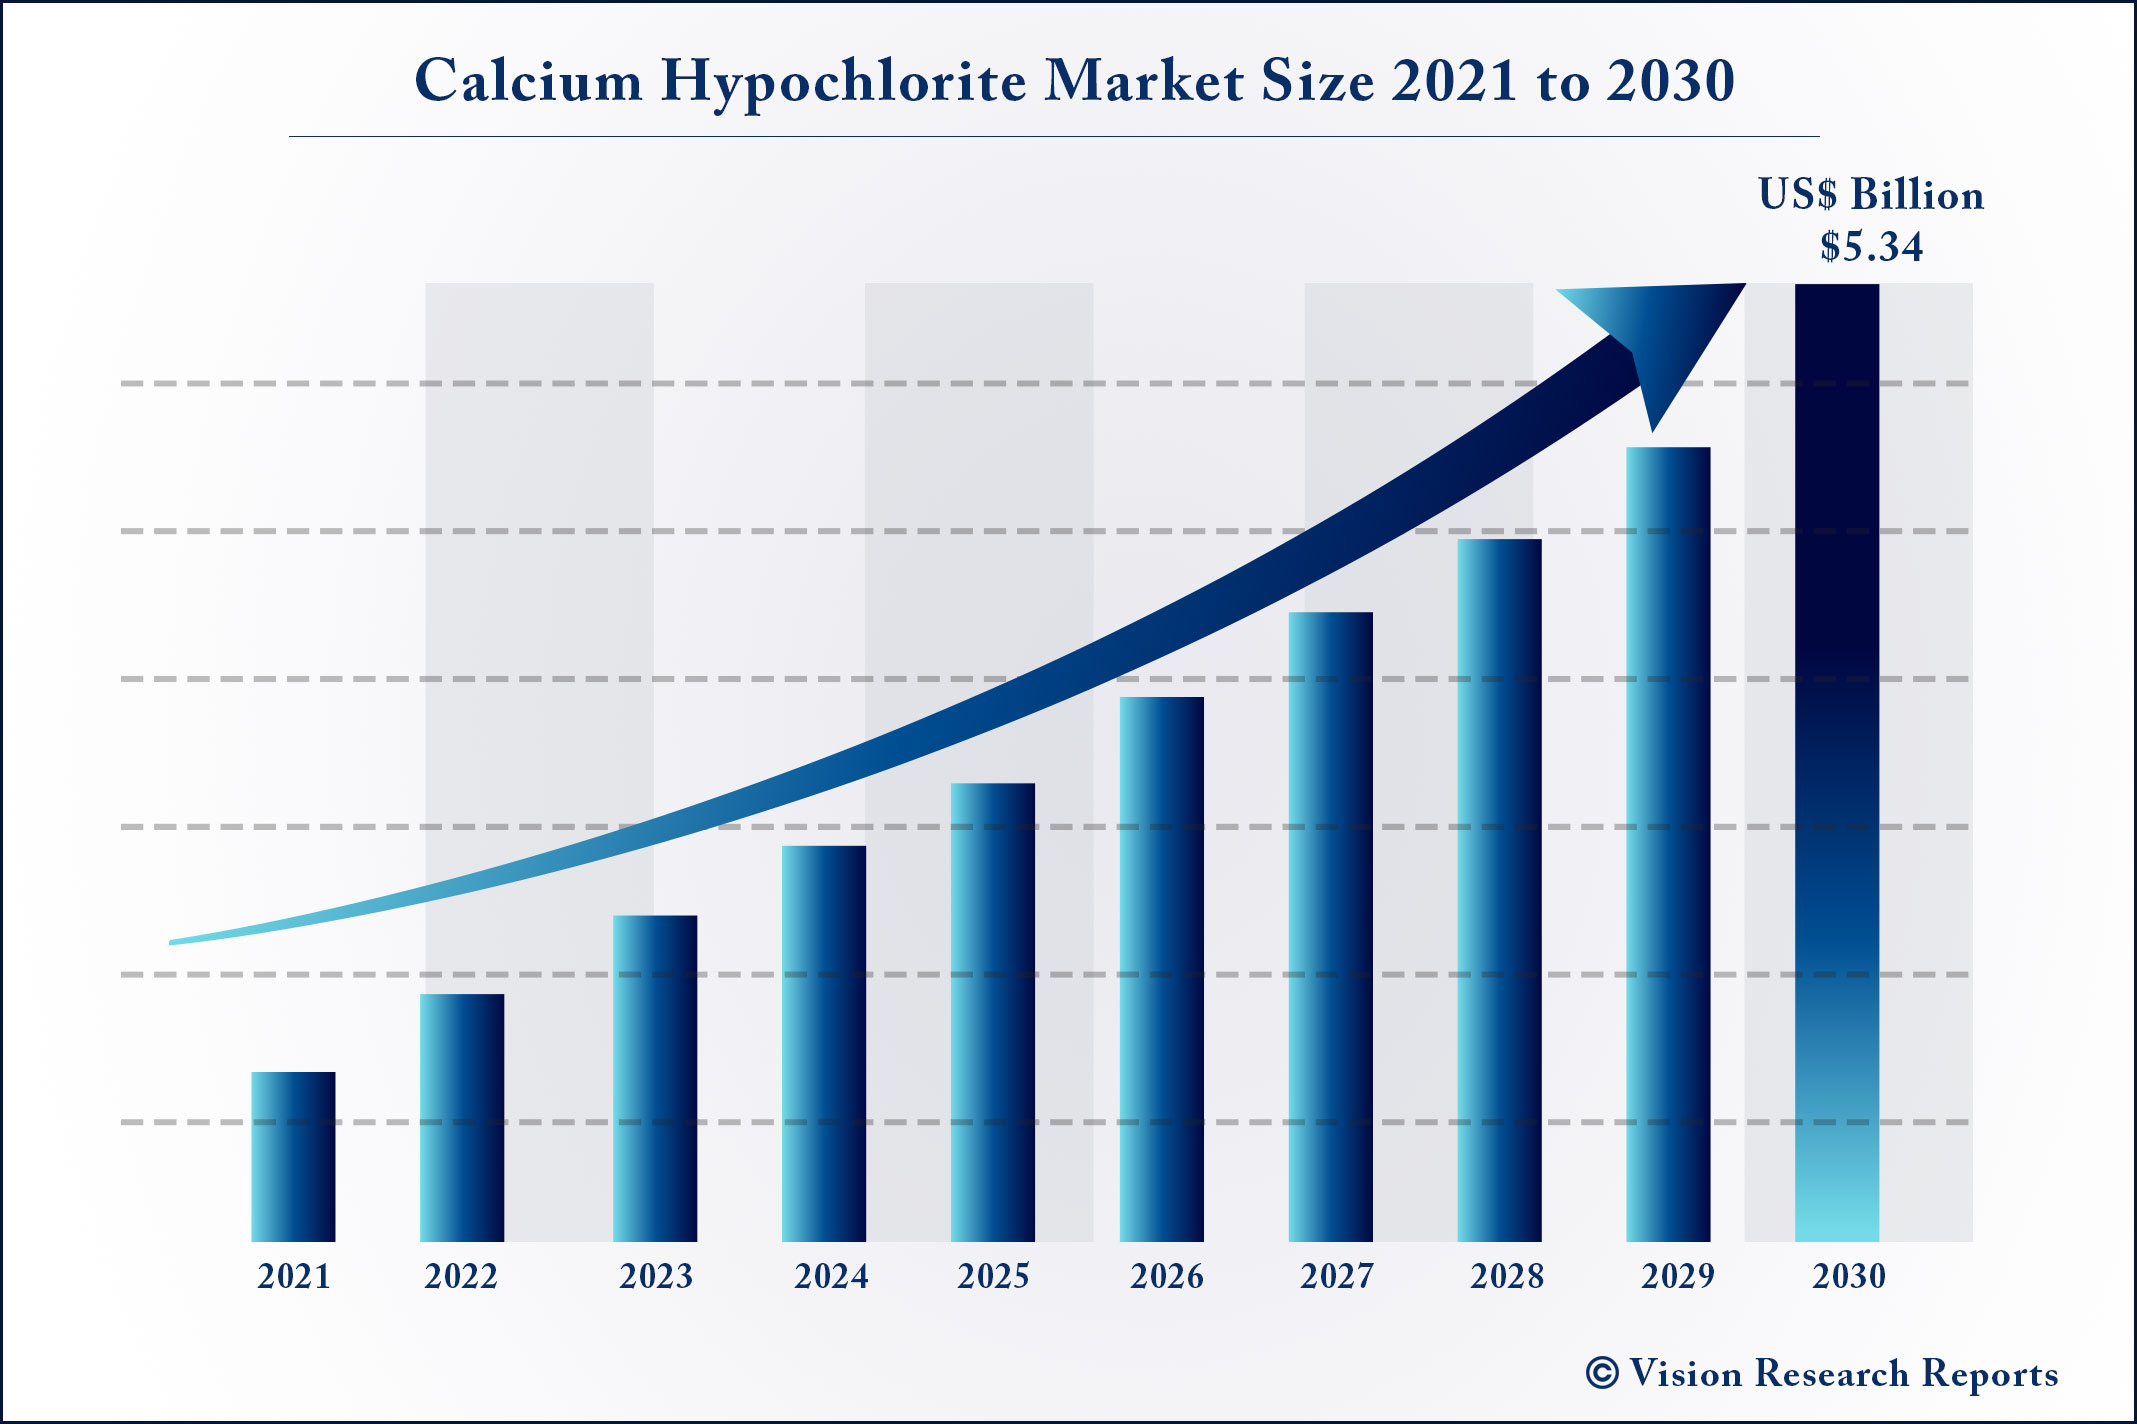 Calcium Hypochlorite Market Size 2021 to 2030